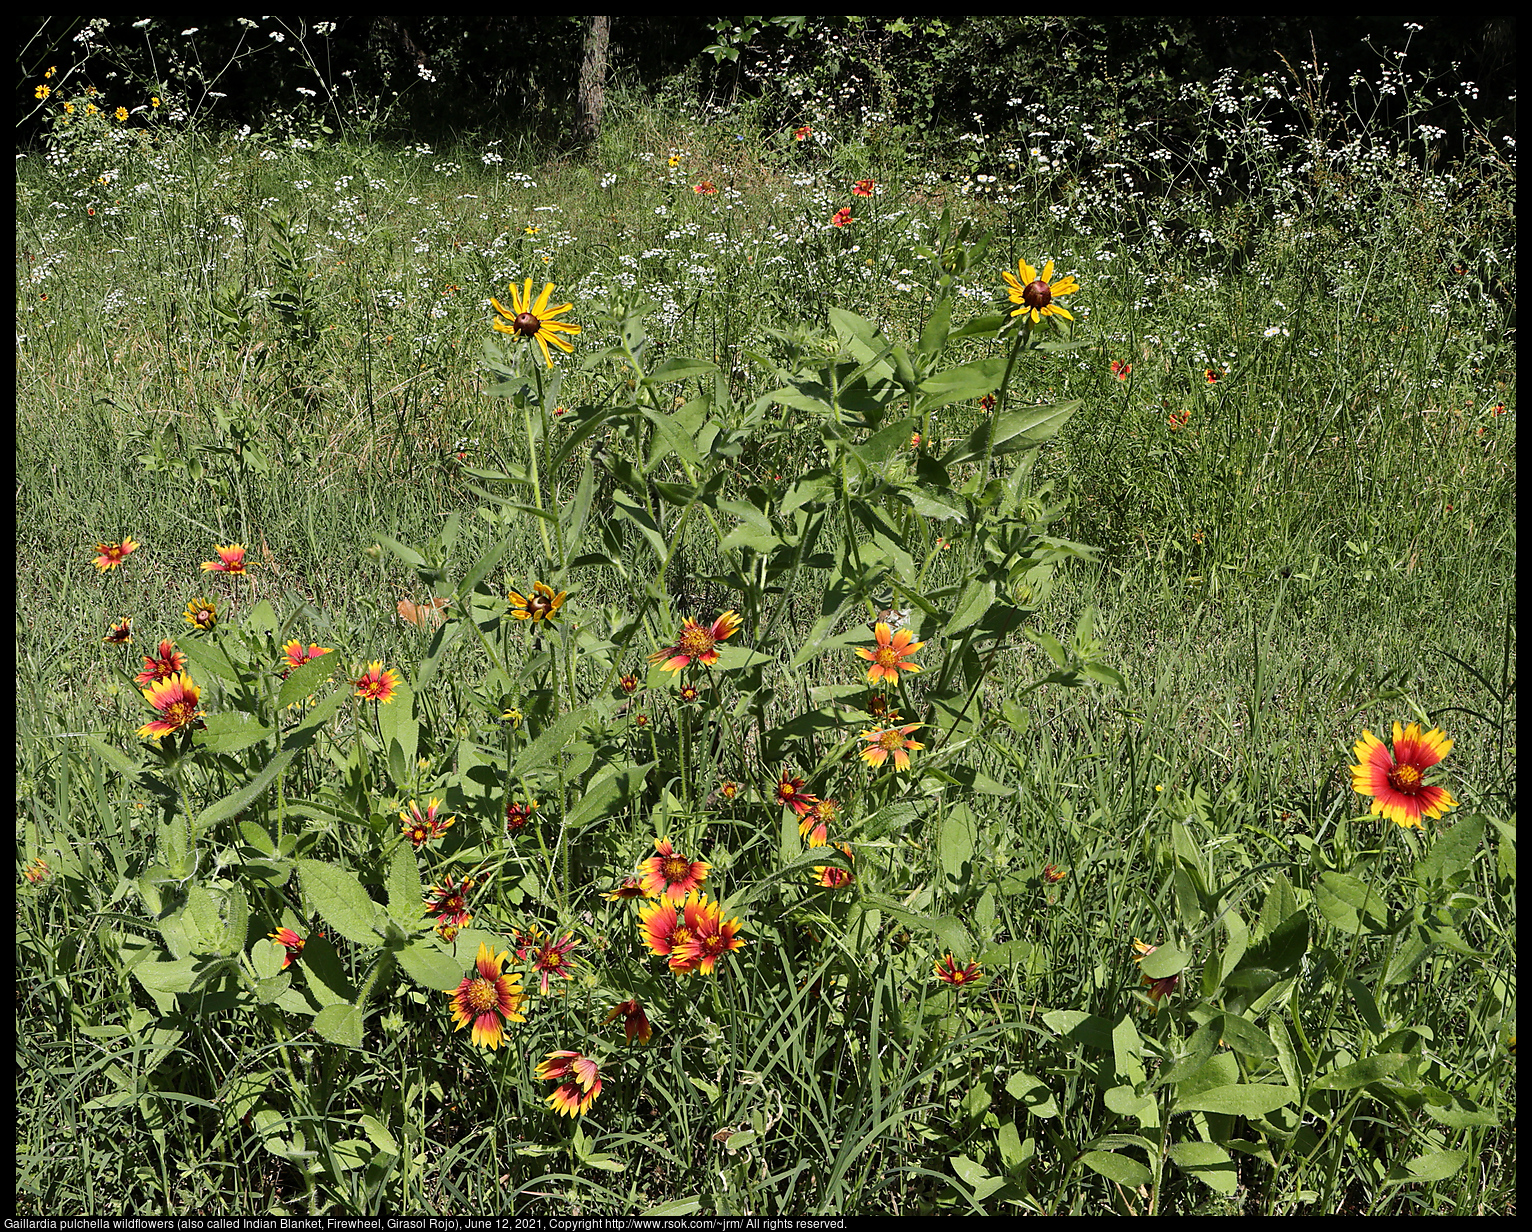 Gaillardia pulchella wildflowers (also called Indian Blanket, Firewheel, Girasol Rojo), June 12, 2021